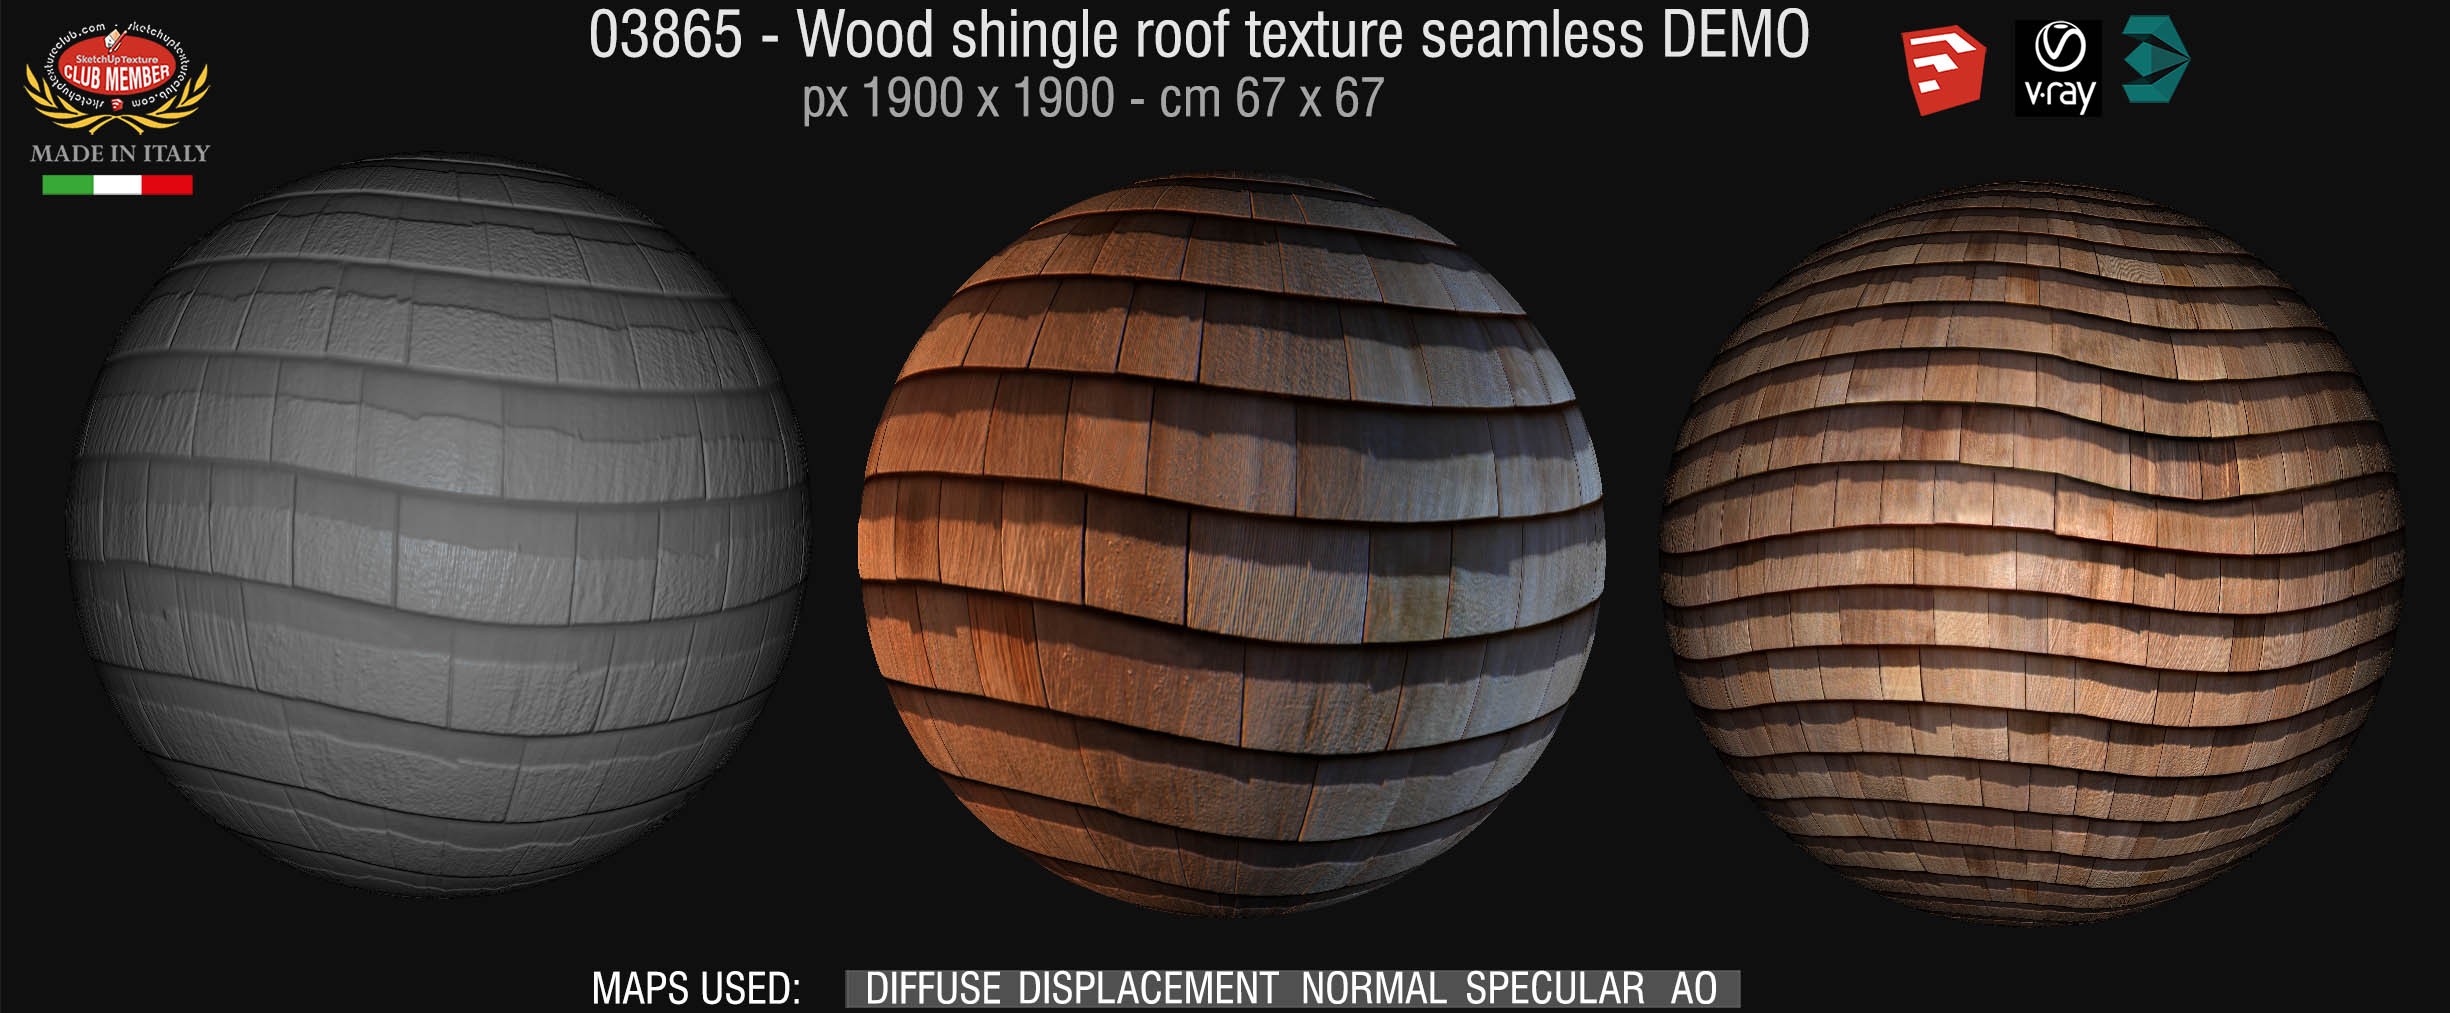 03865 Wood shingle roof texture seamless + maps DEMO